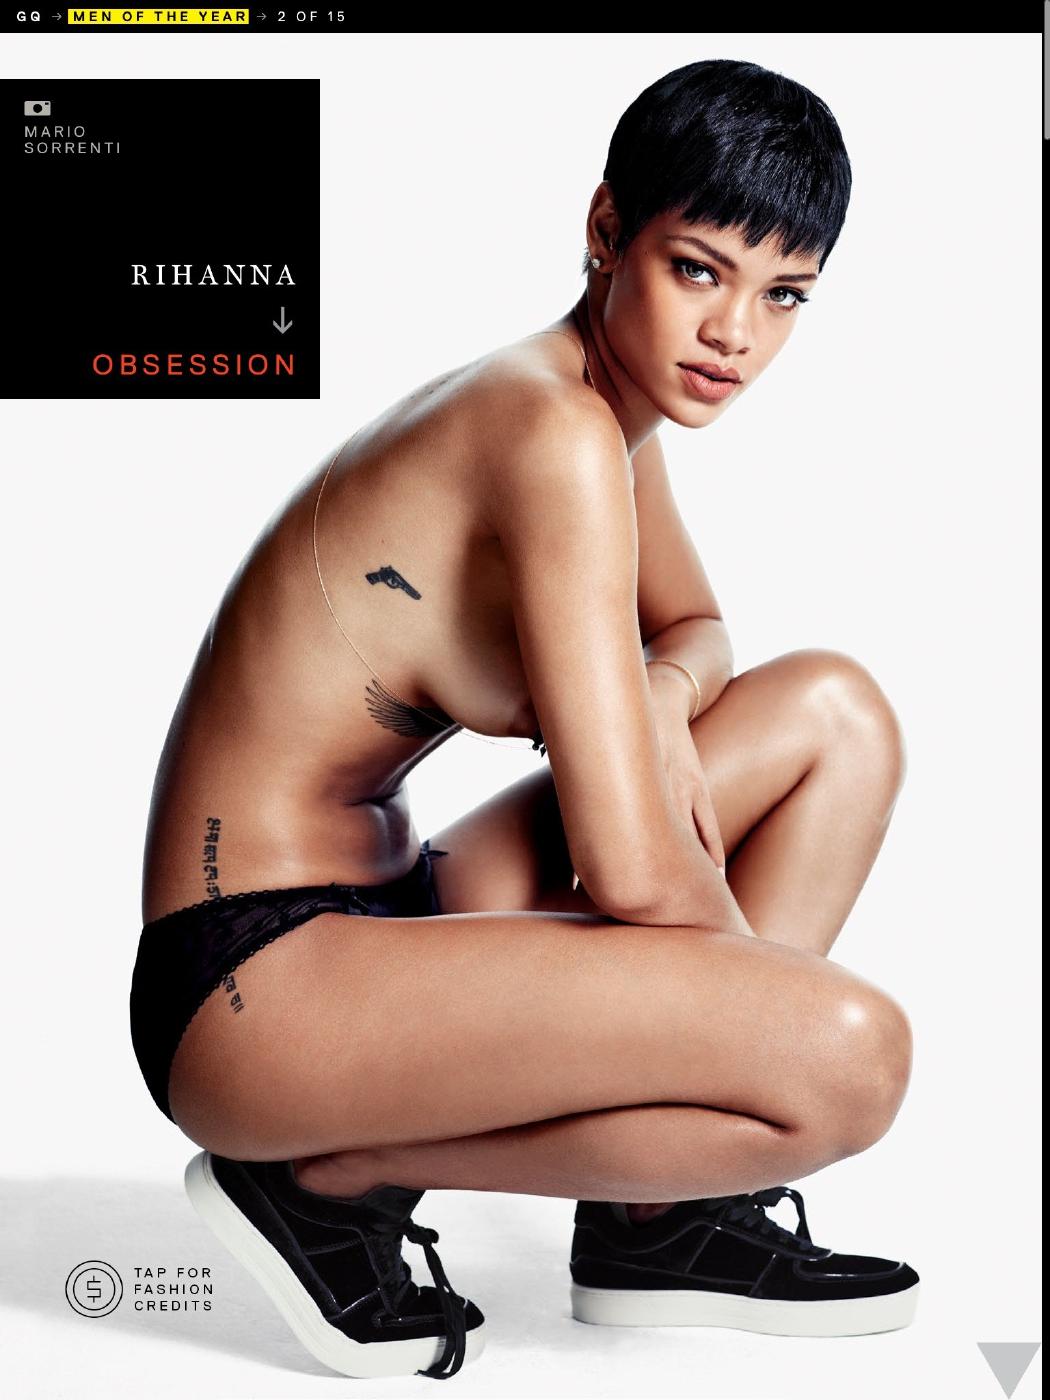 Leaked rihanna porn Rihanna